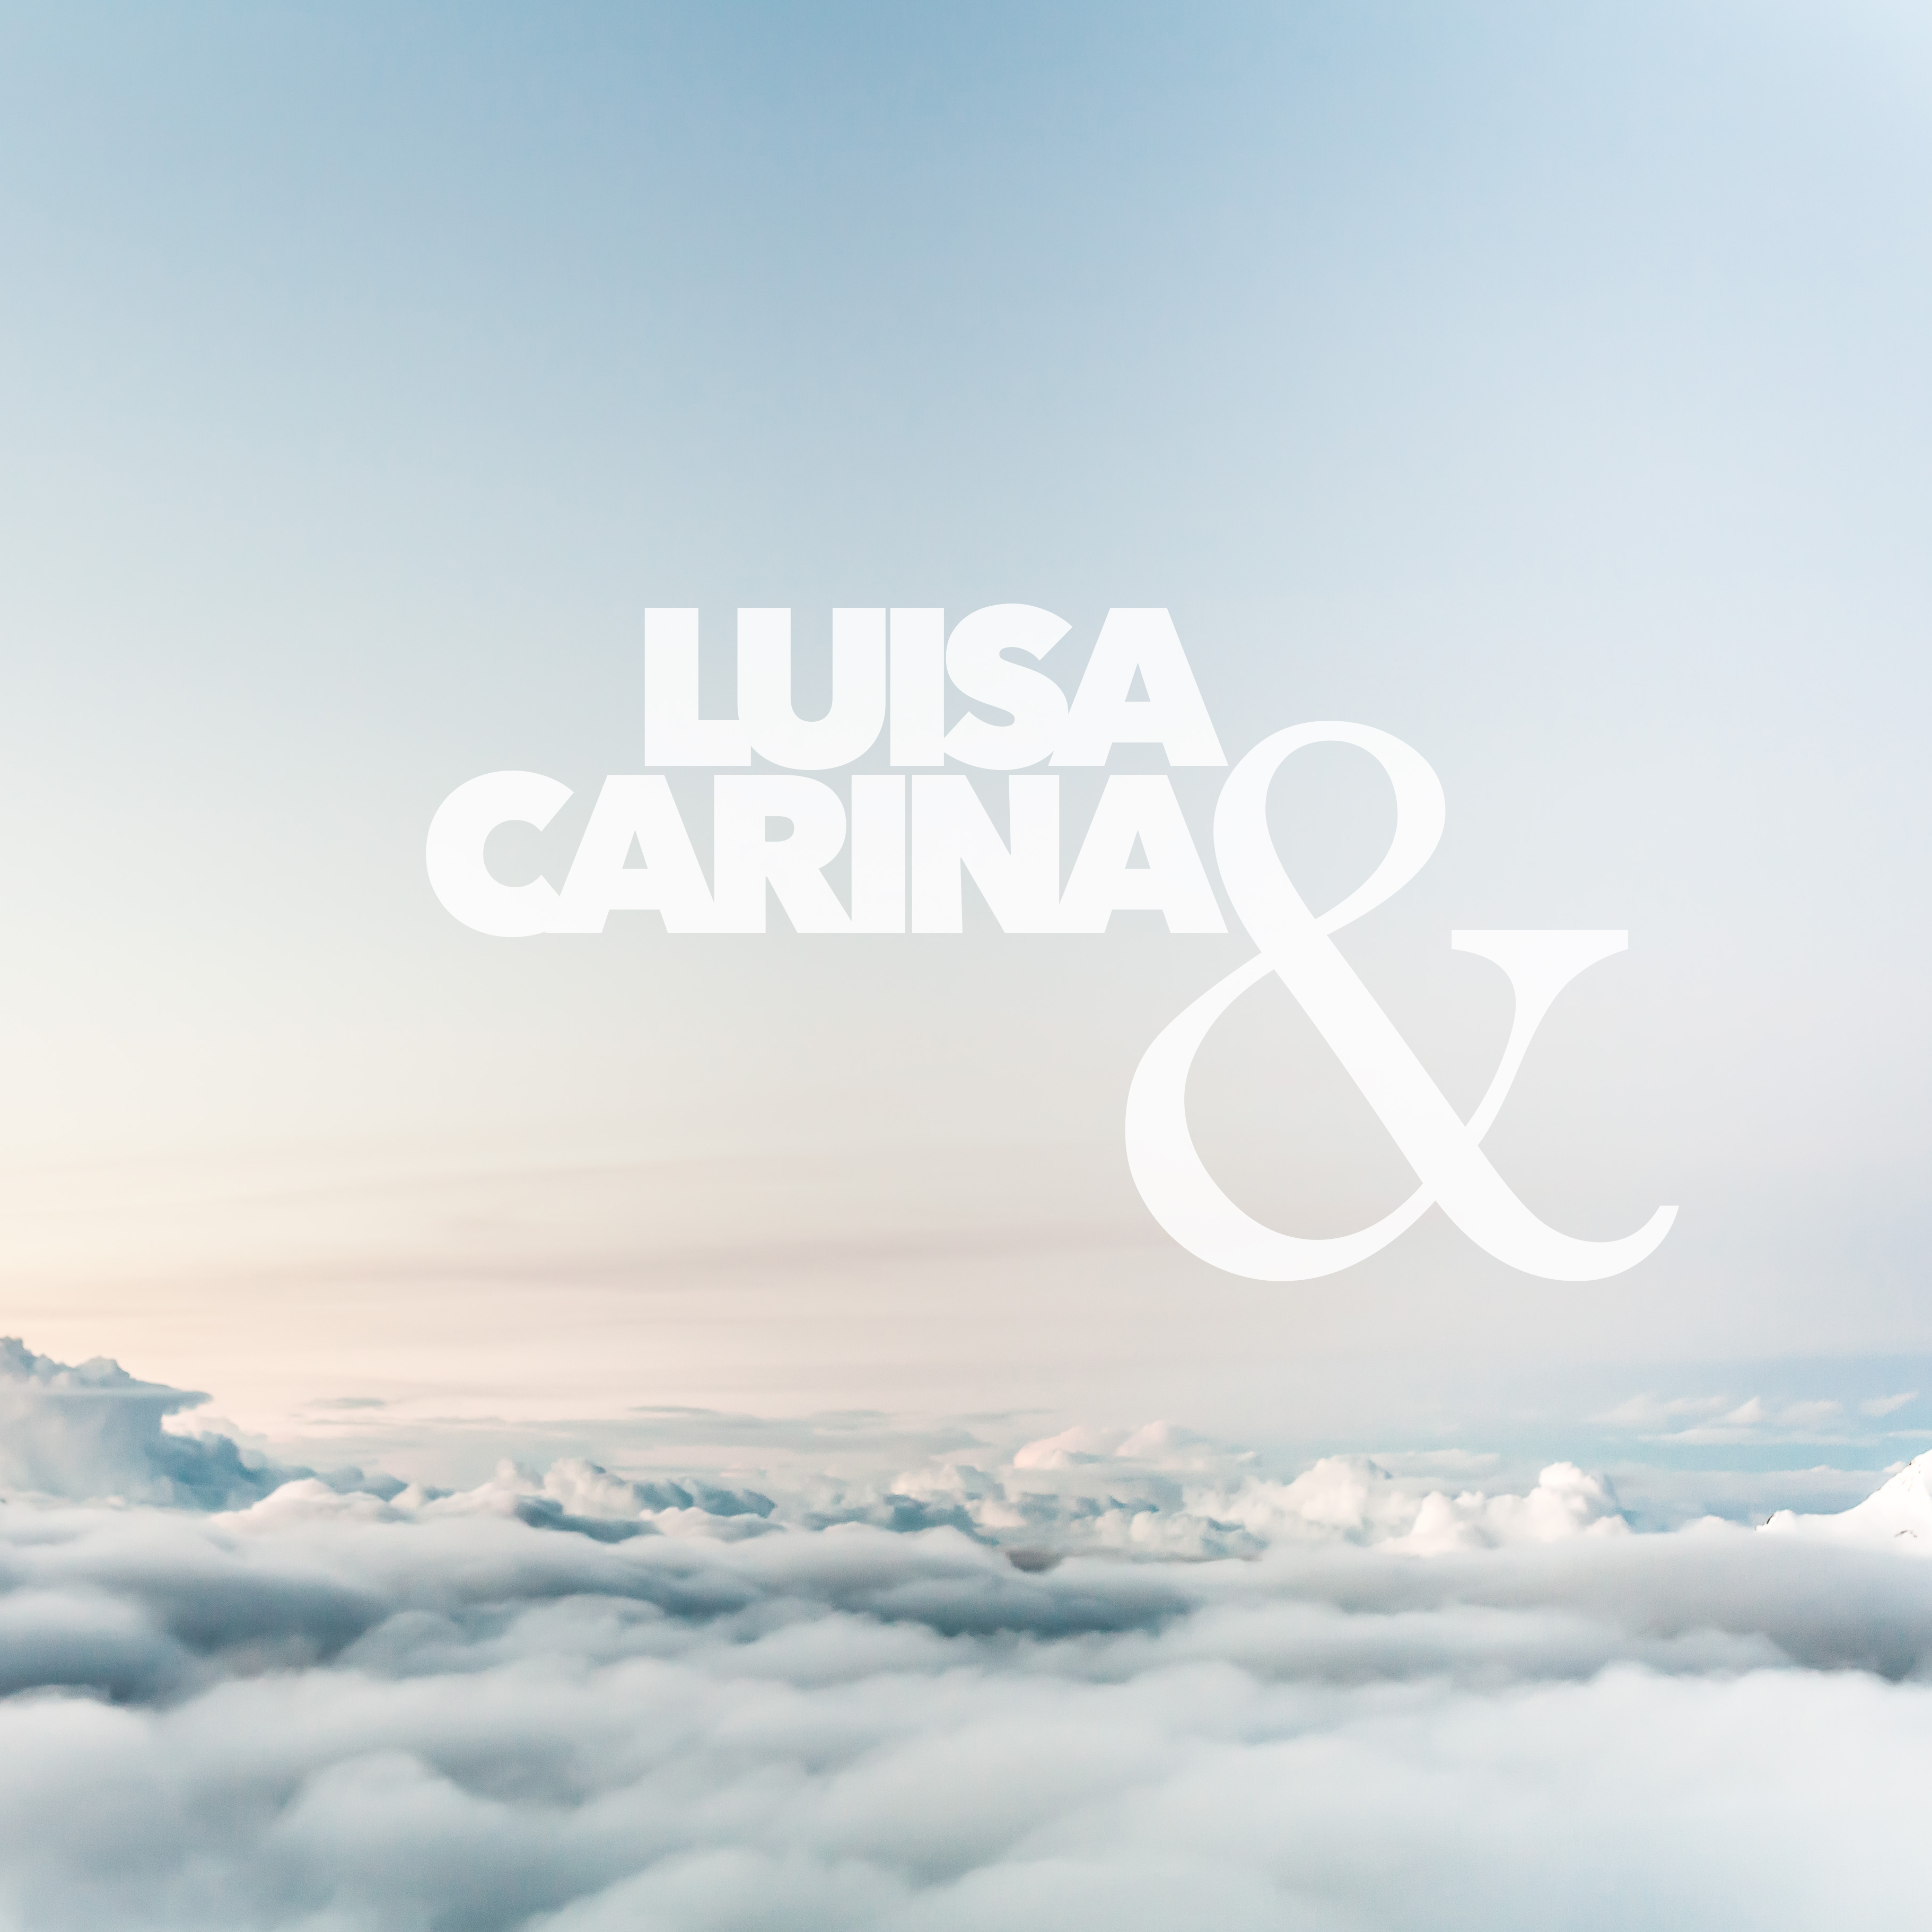 Luisa & Carina podkast podcast - Carina Behrens, carinabehrens.com